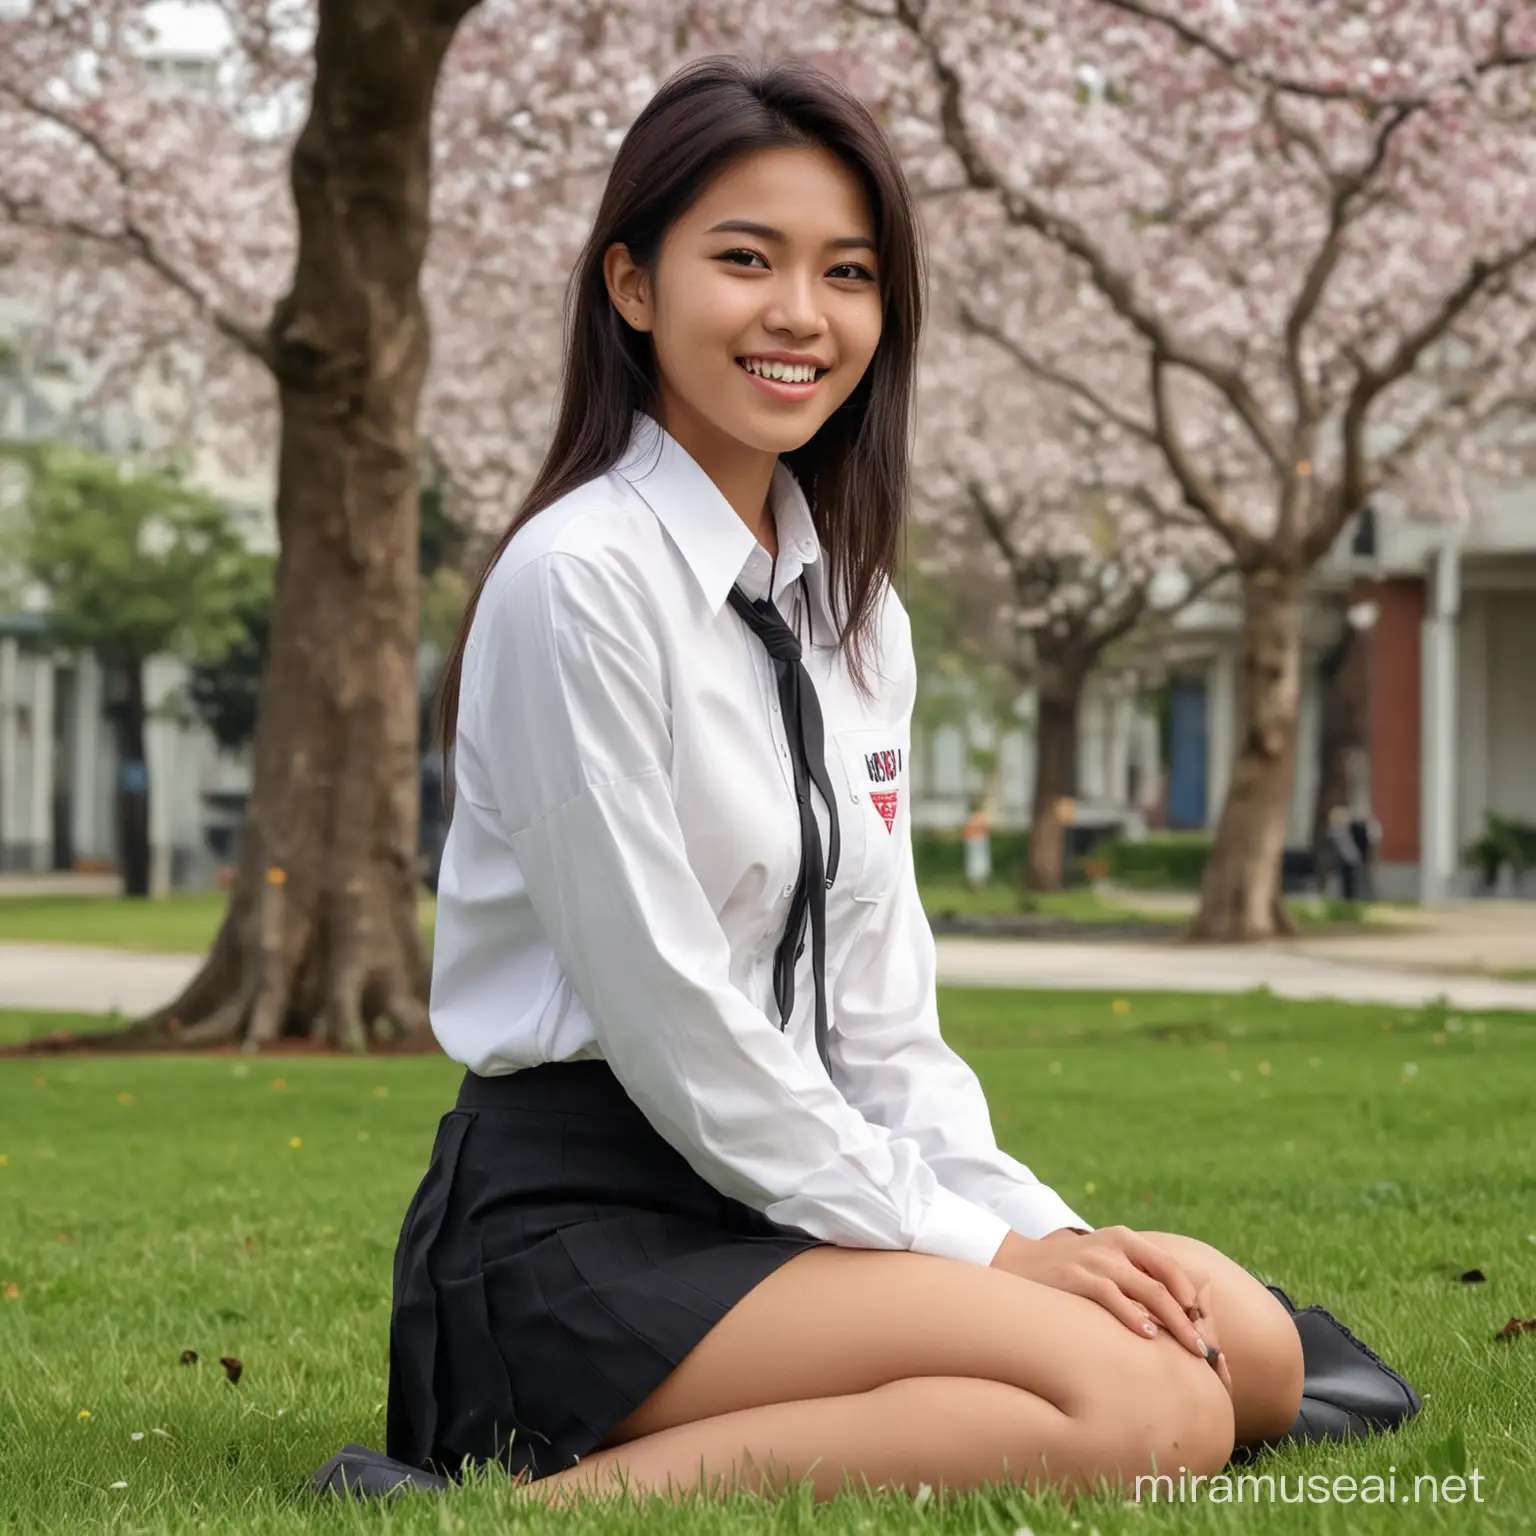 Beautiful Javanese Indonesian Girl in Senior High School Uniform Sitting in Cherry Blossom Park